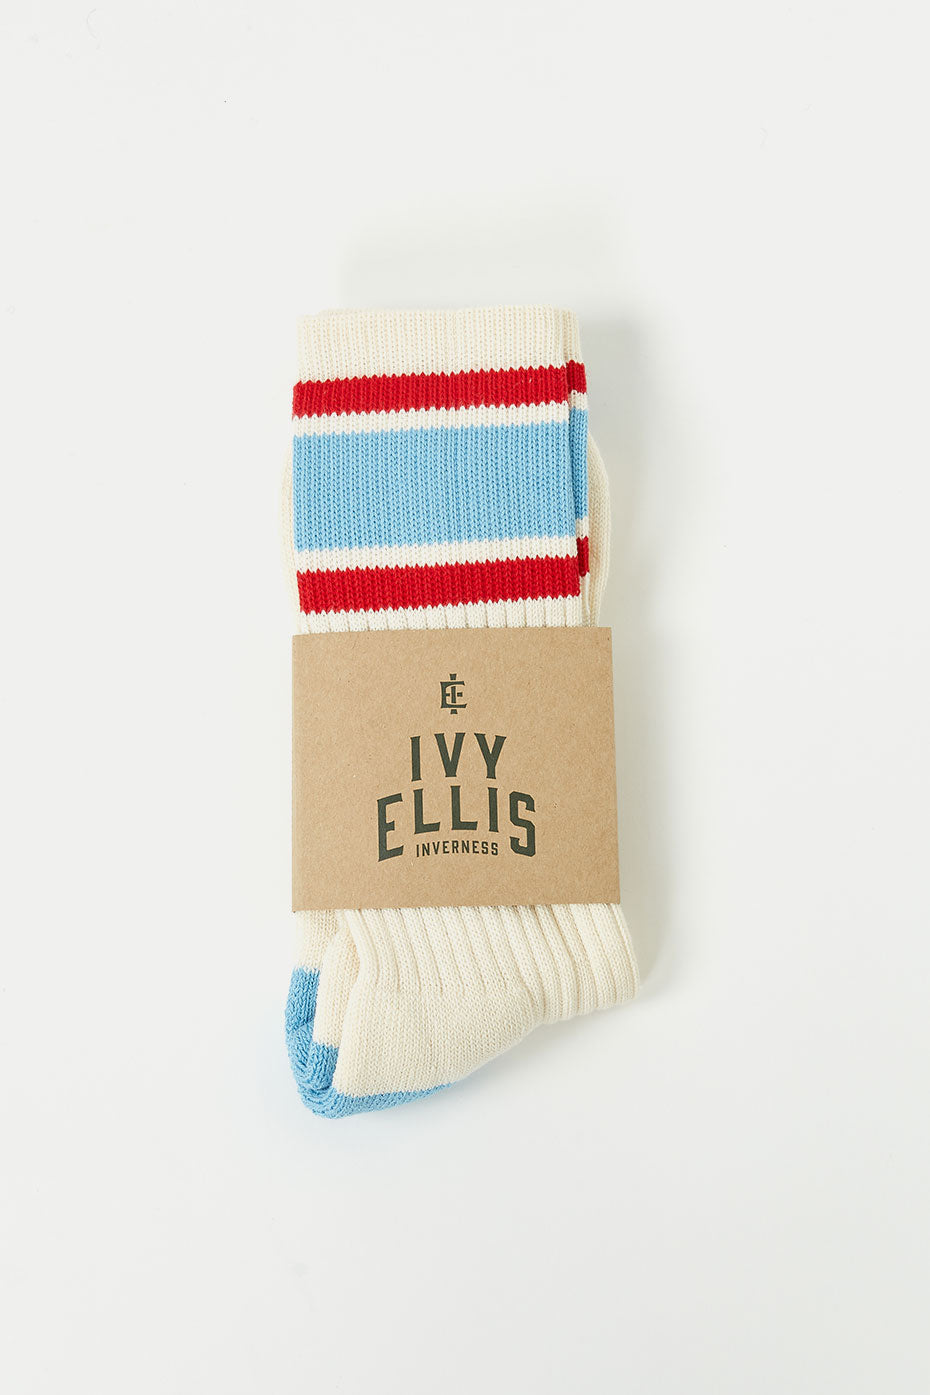 Ivy Ellis Moon Vintage Cotton Sport Socks Mens